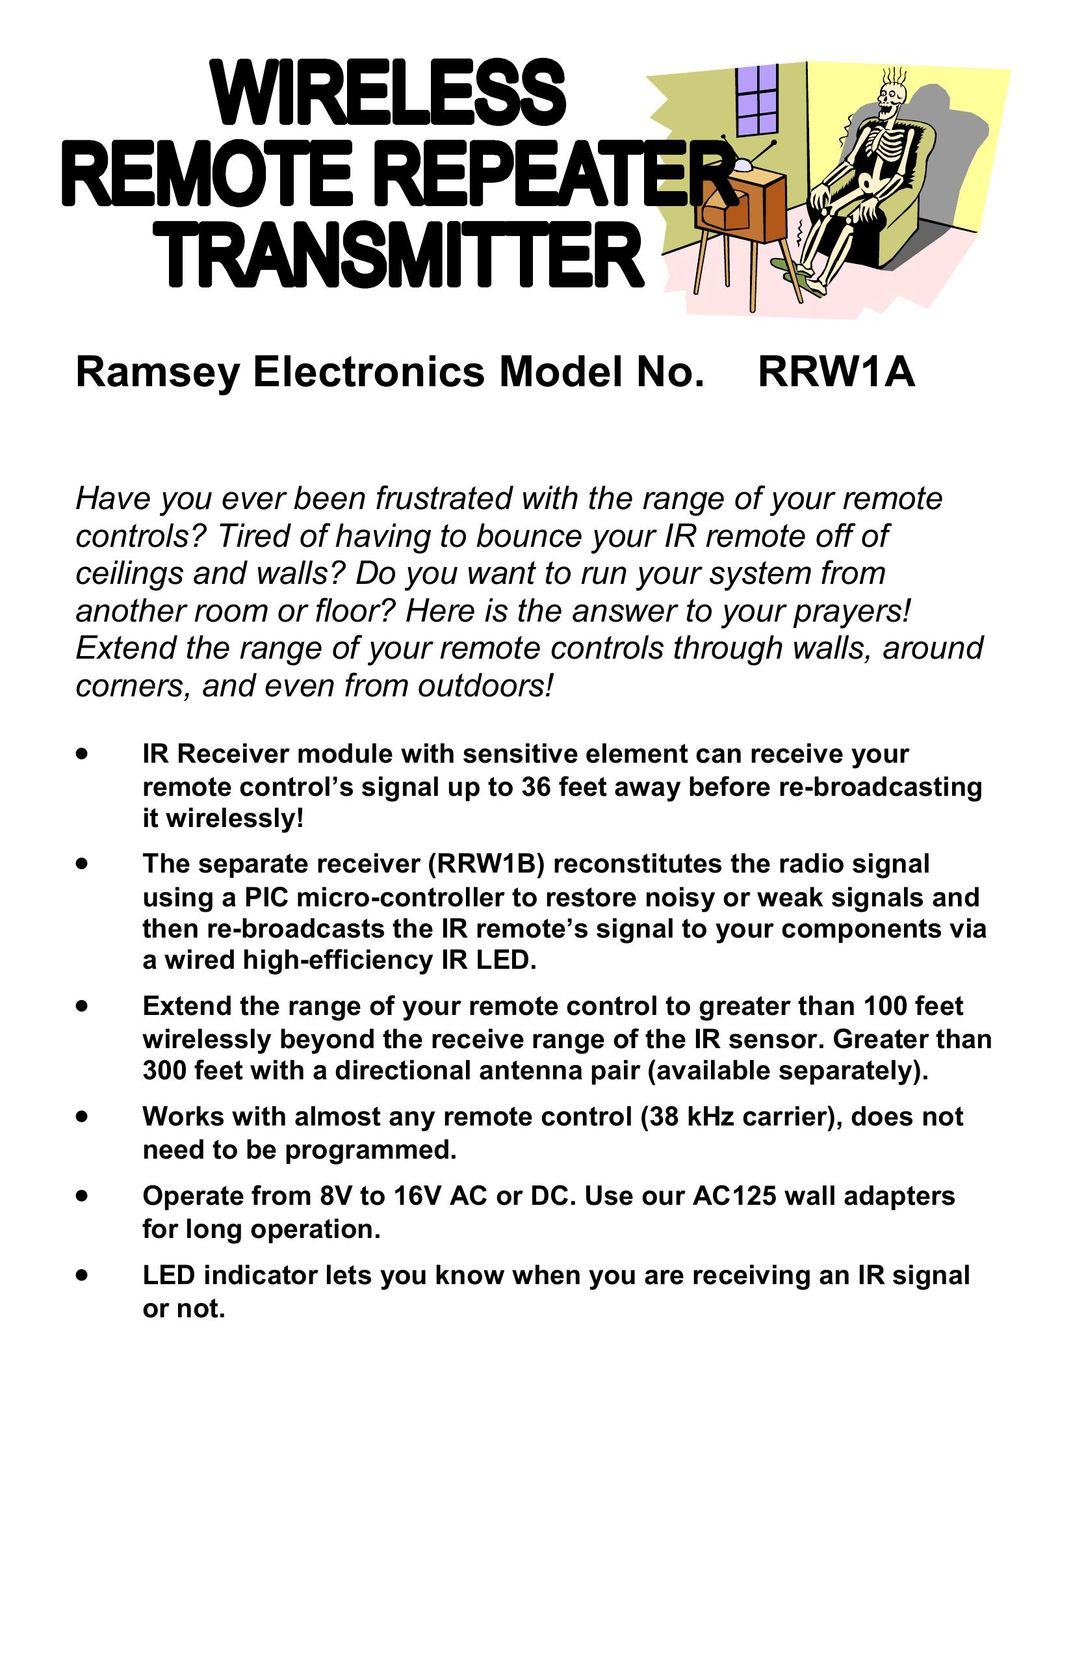 Ramsey Electronics RRW1A Satellite Radio User Manual